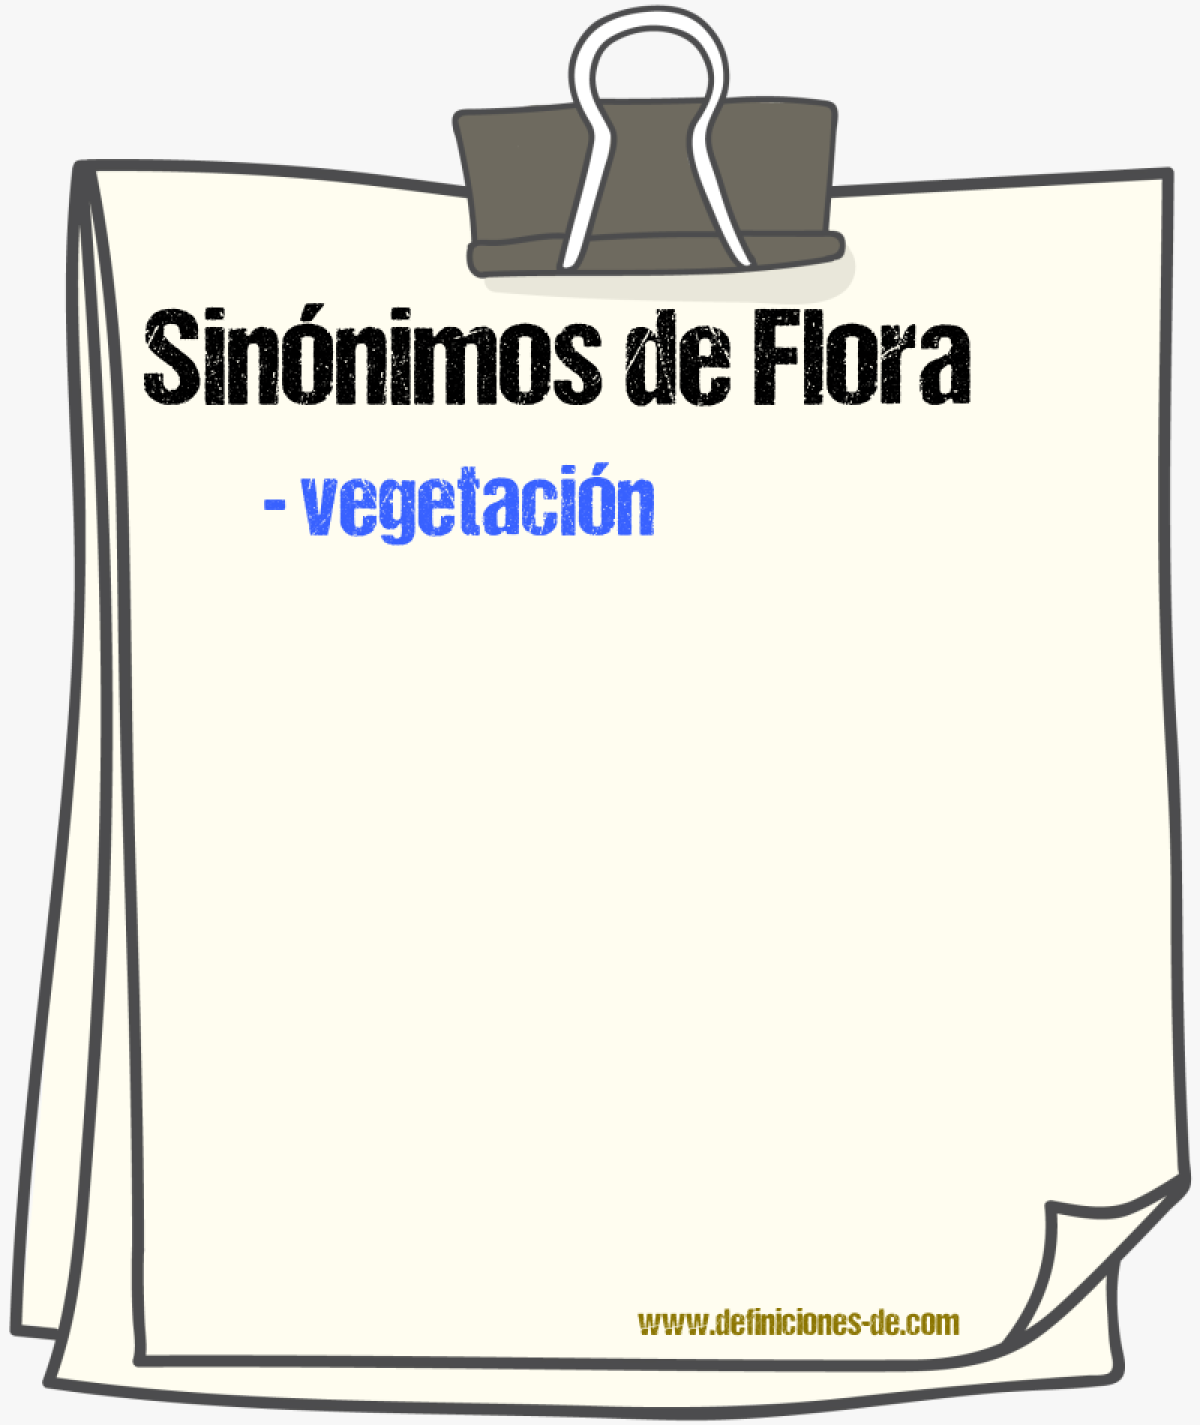 Sinónimos de flora